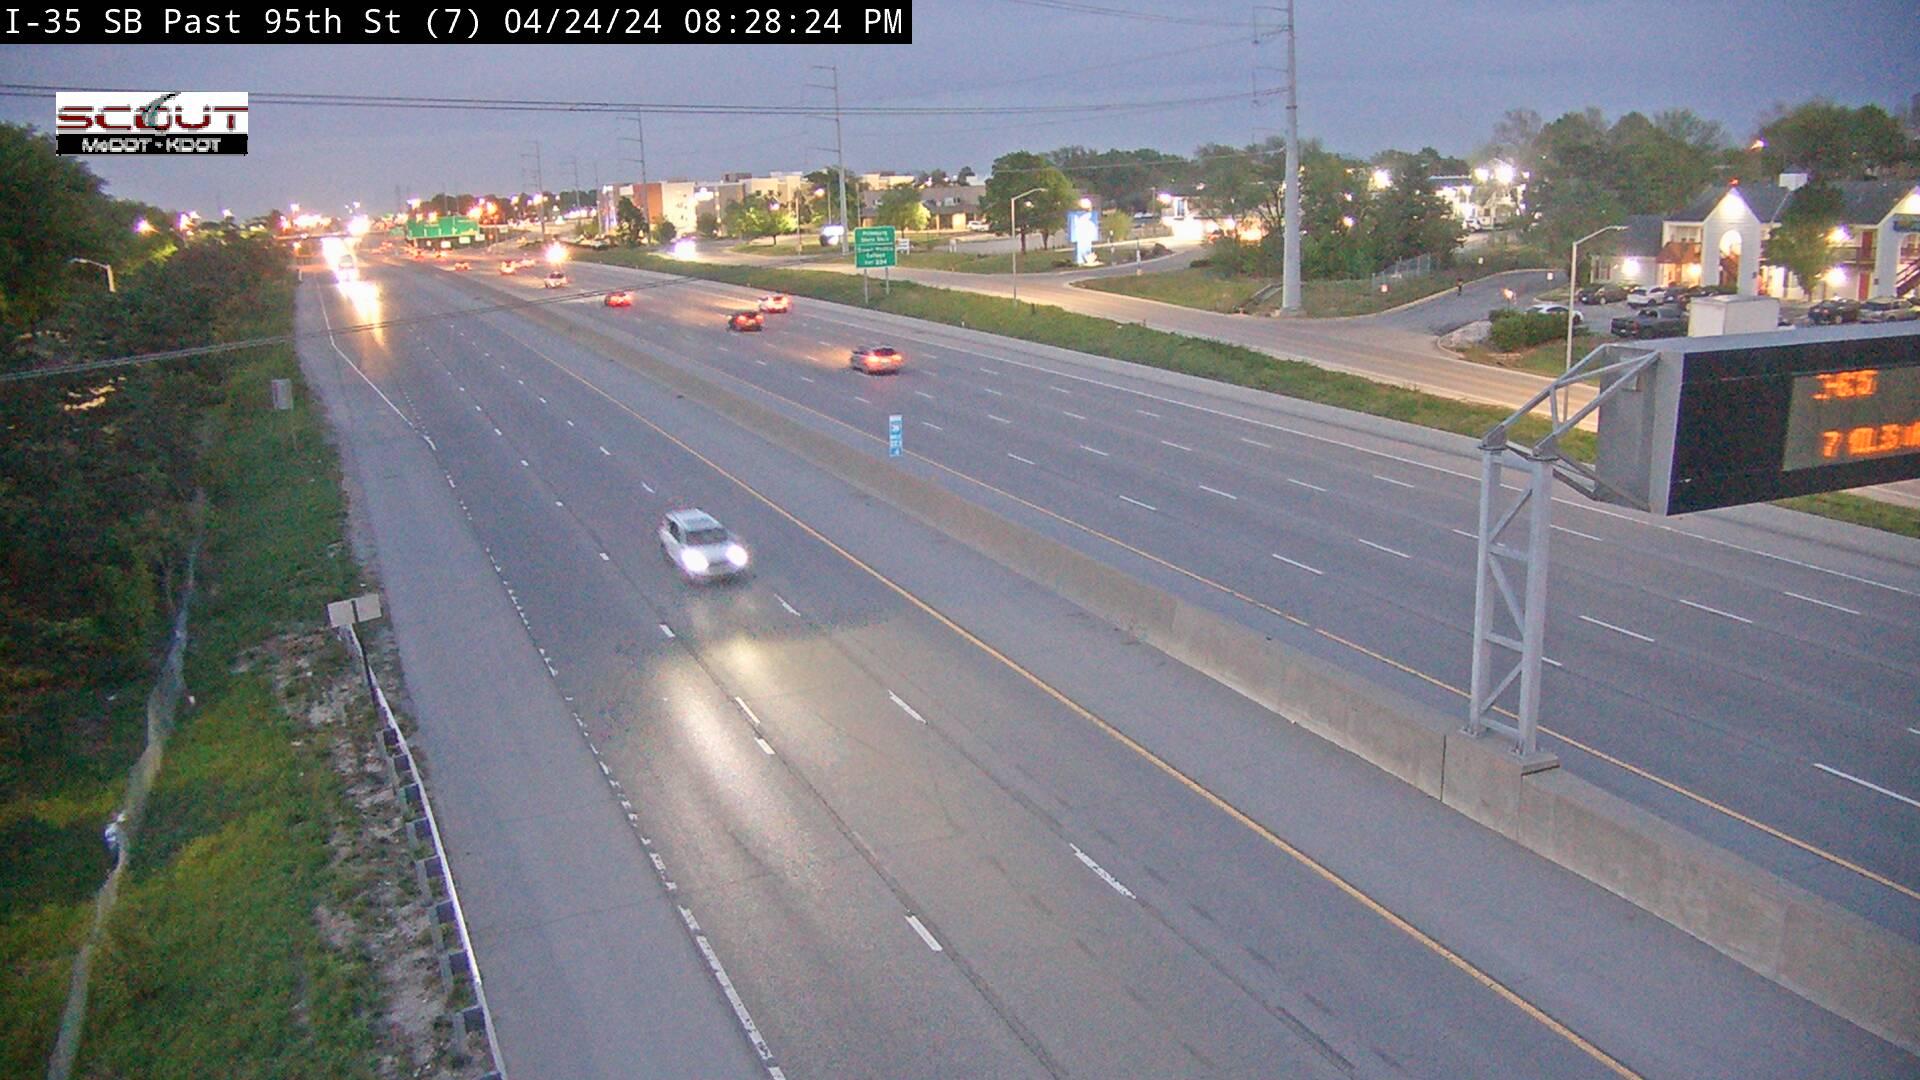 Lenexa: I-35 SB @ S of 95TH ST Traffic Camera